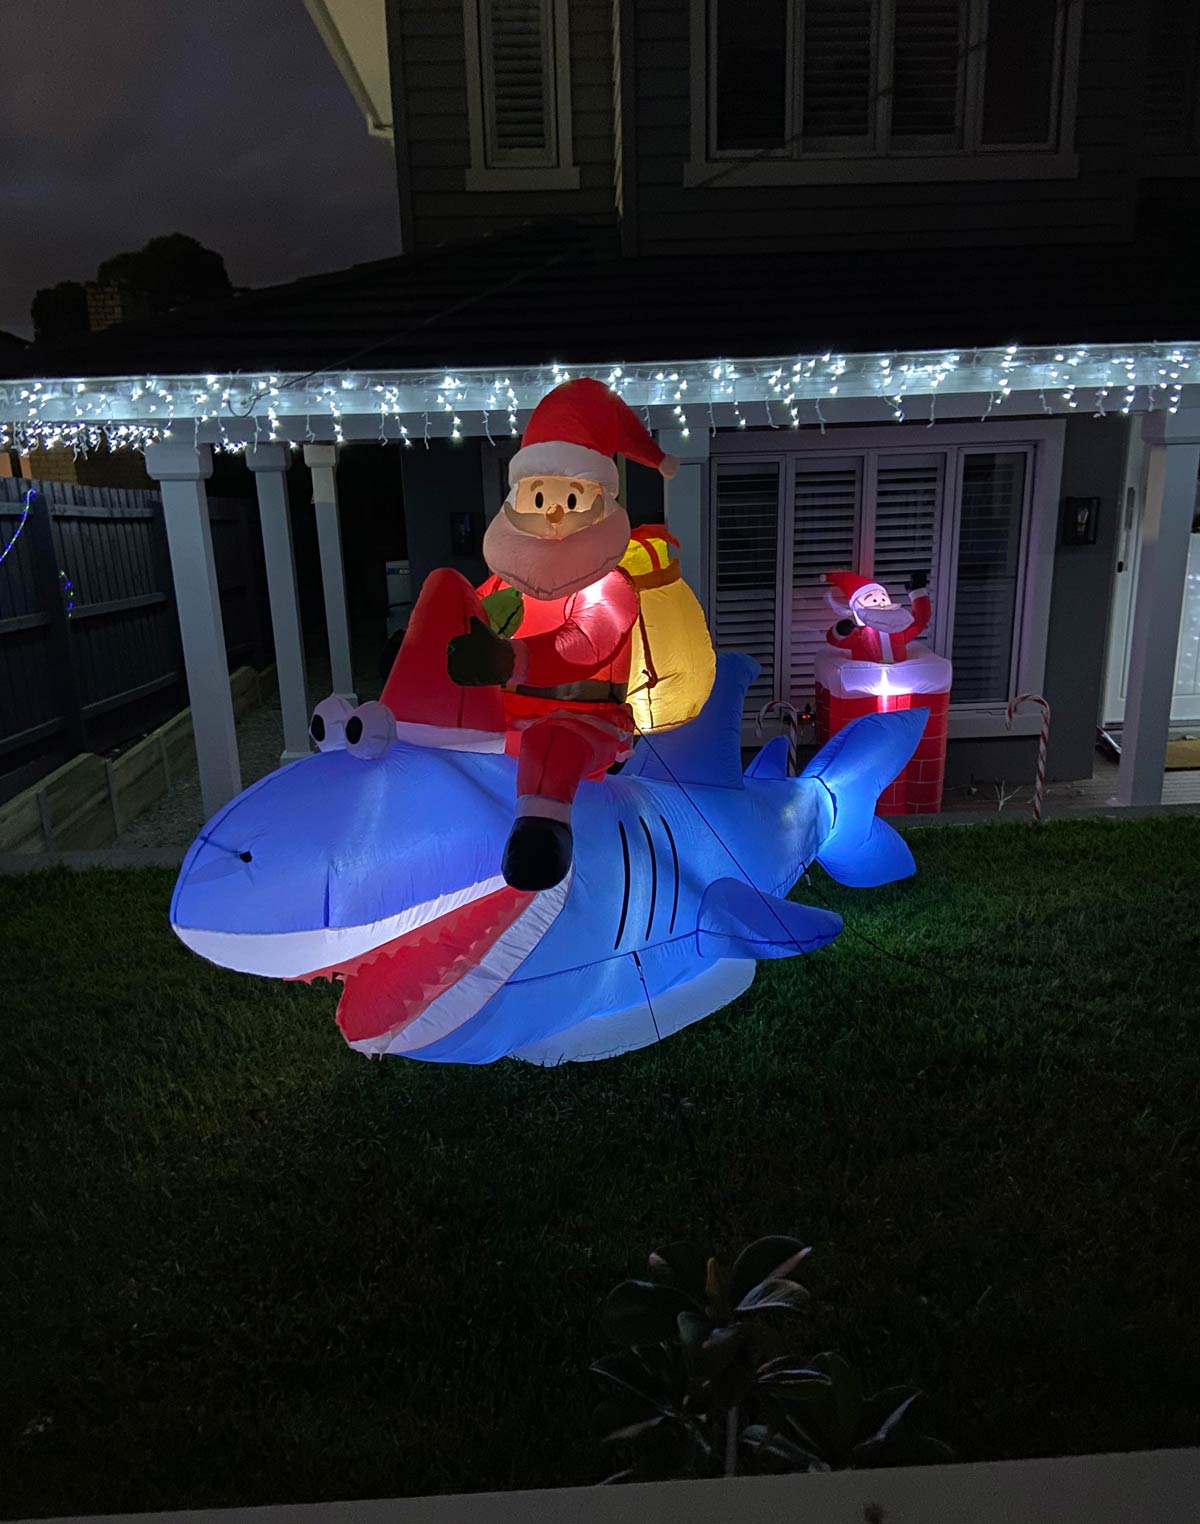 n Australia Santa delivers presents on a shark..